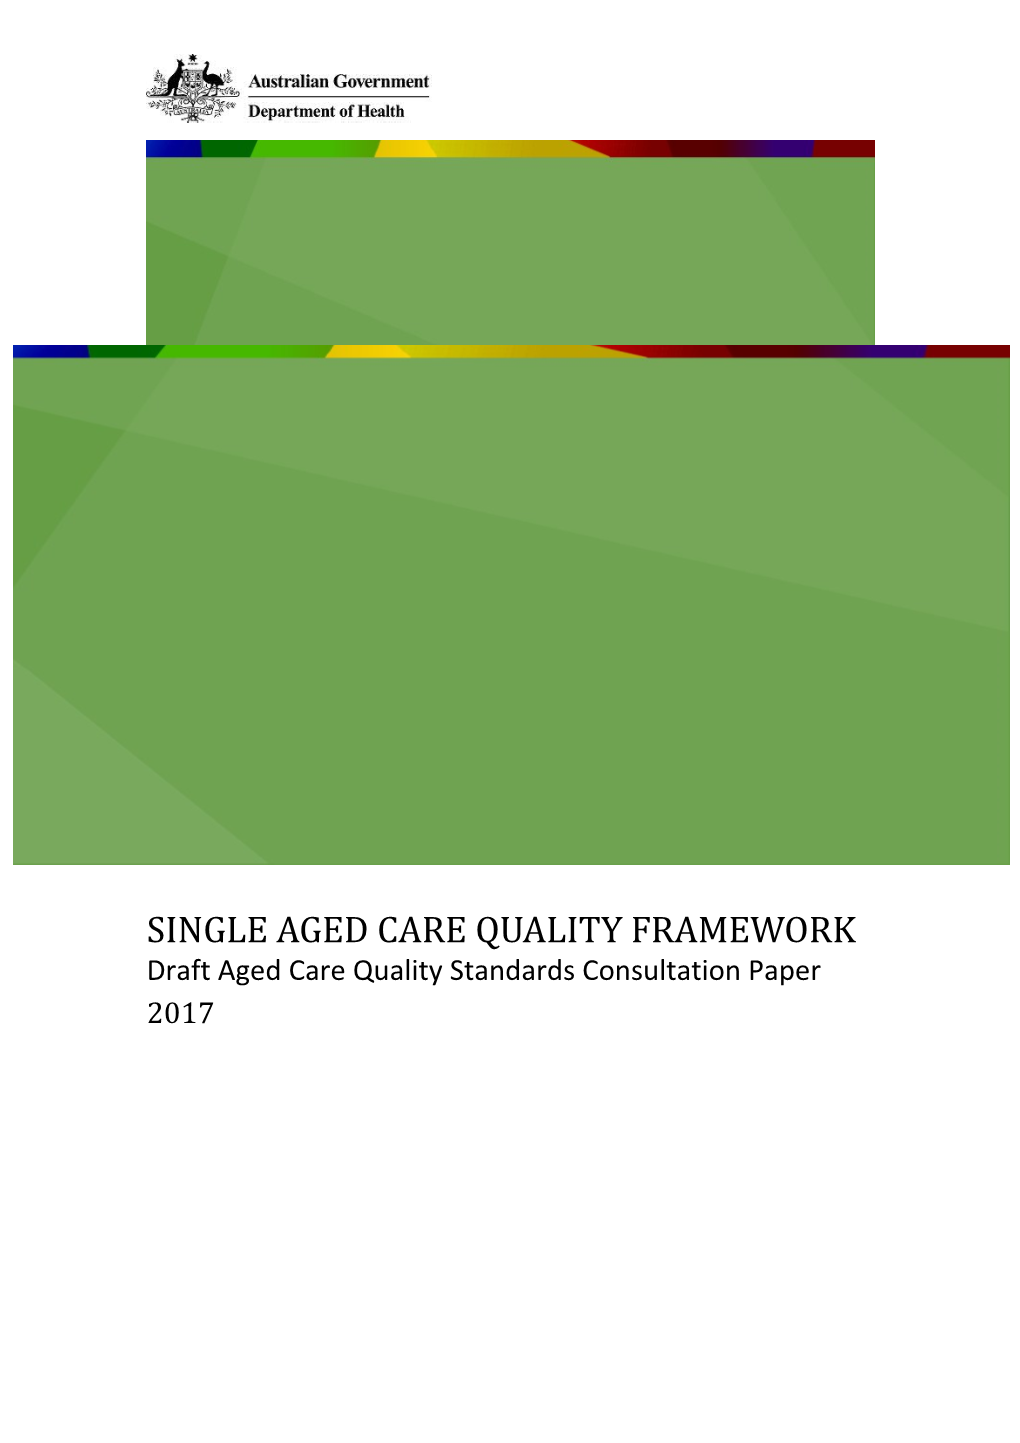 Single Aged Care Quality Framework